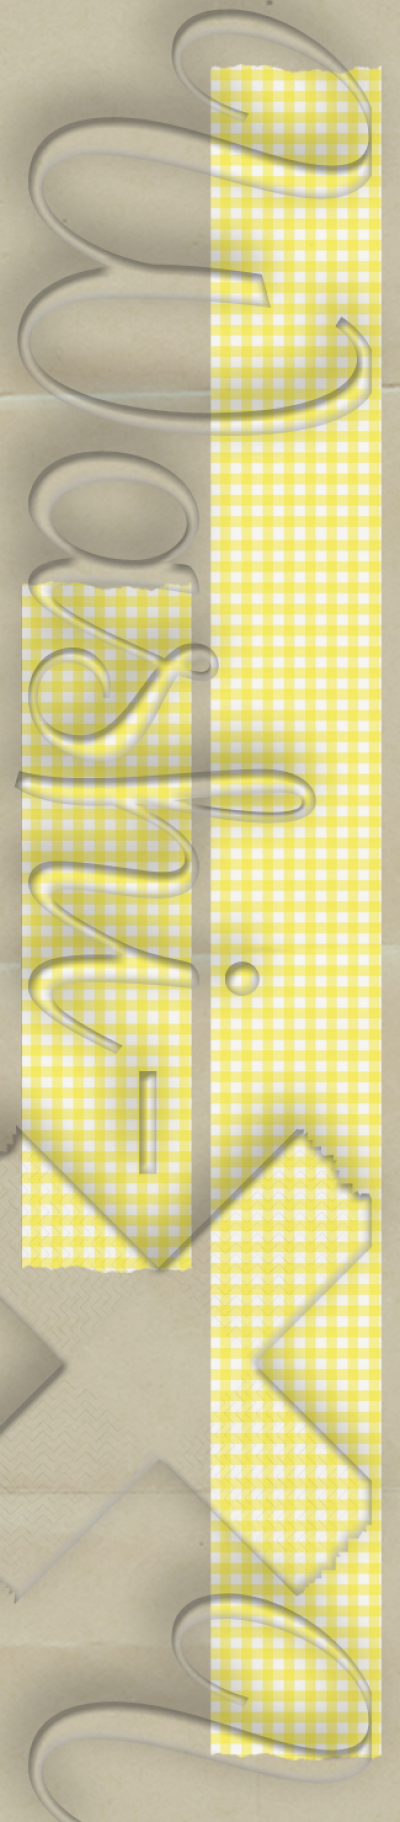 Yellow squares patterned washi tape